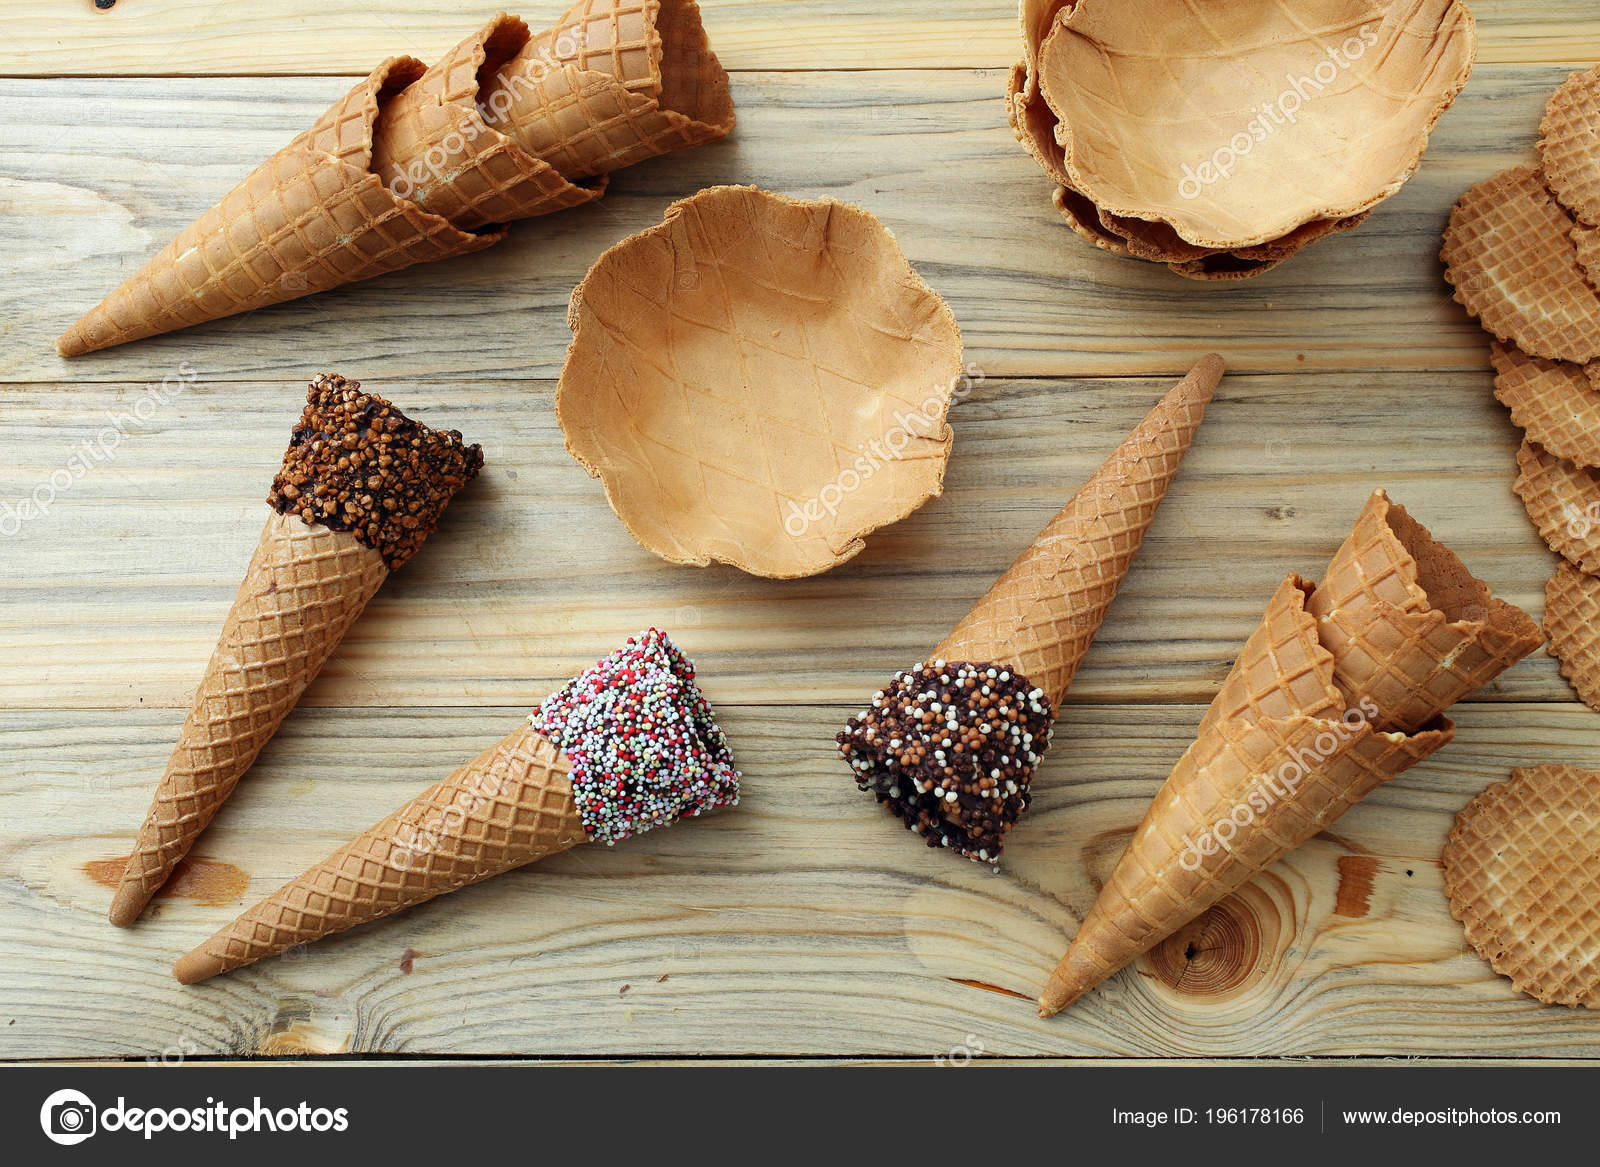 https://st4.depositphotos.com/1699440/19617/i/1600/depositphotos_196178166-stock-photo-accessories-serve-ice-cream-cones.jpg